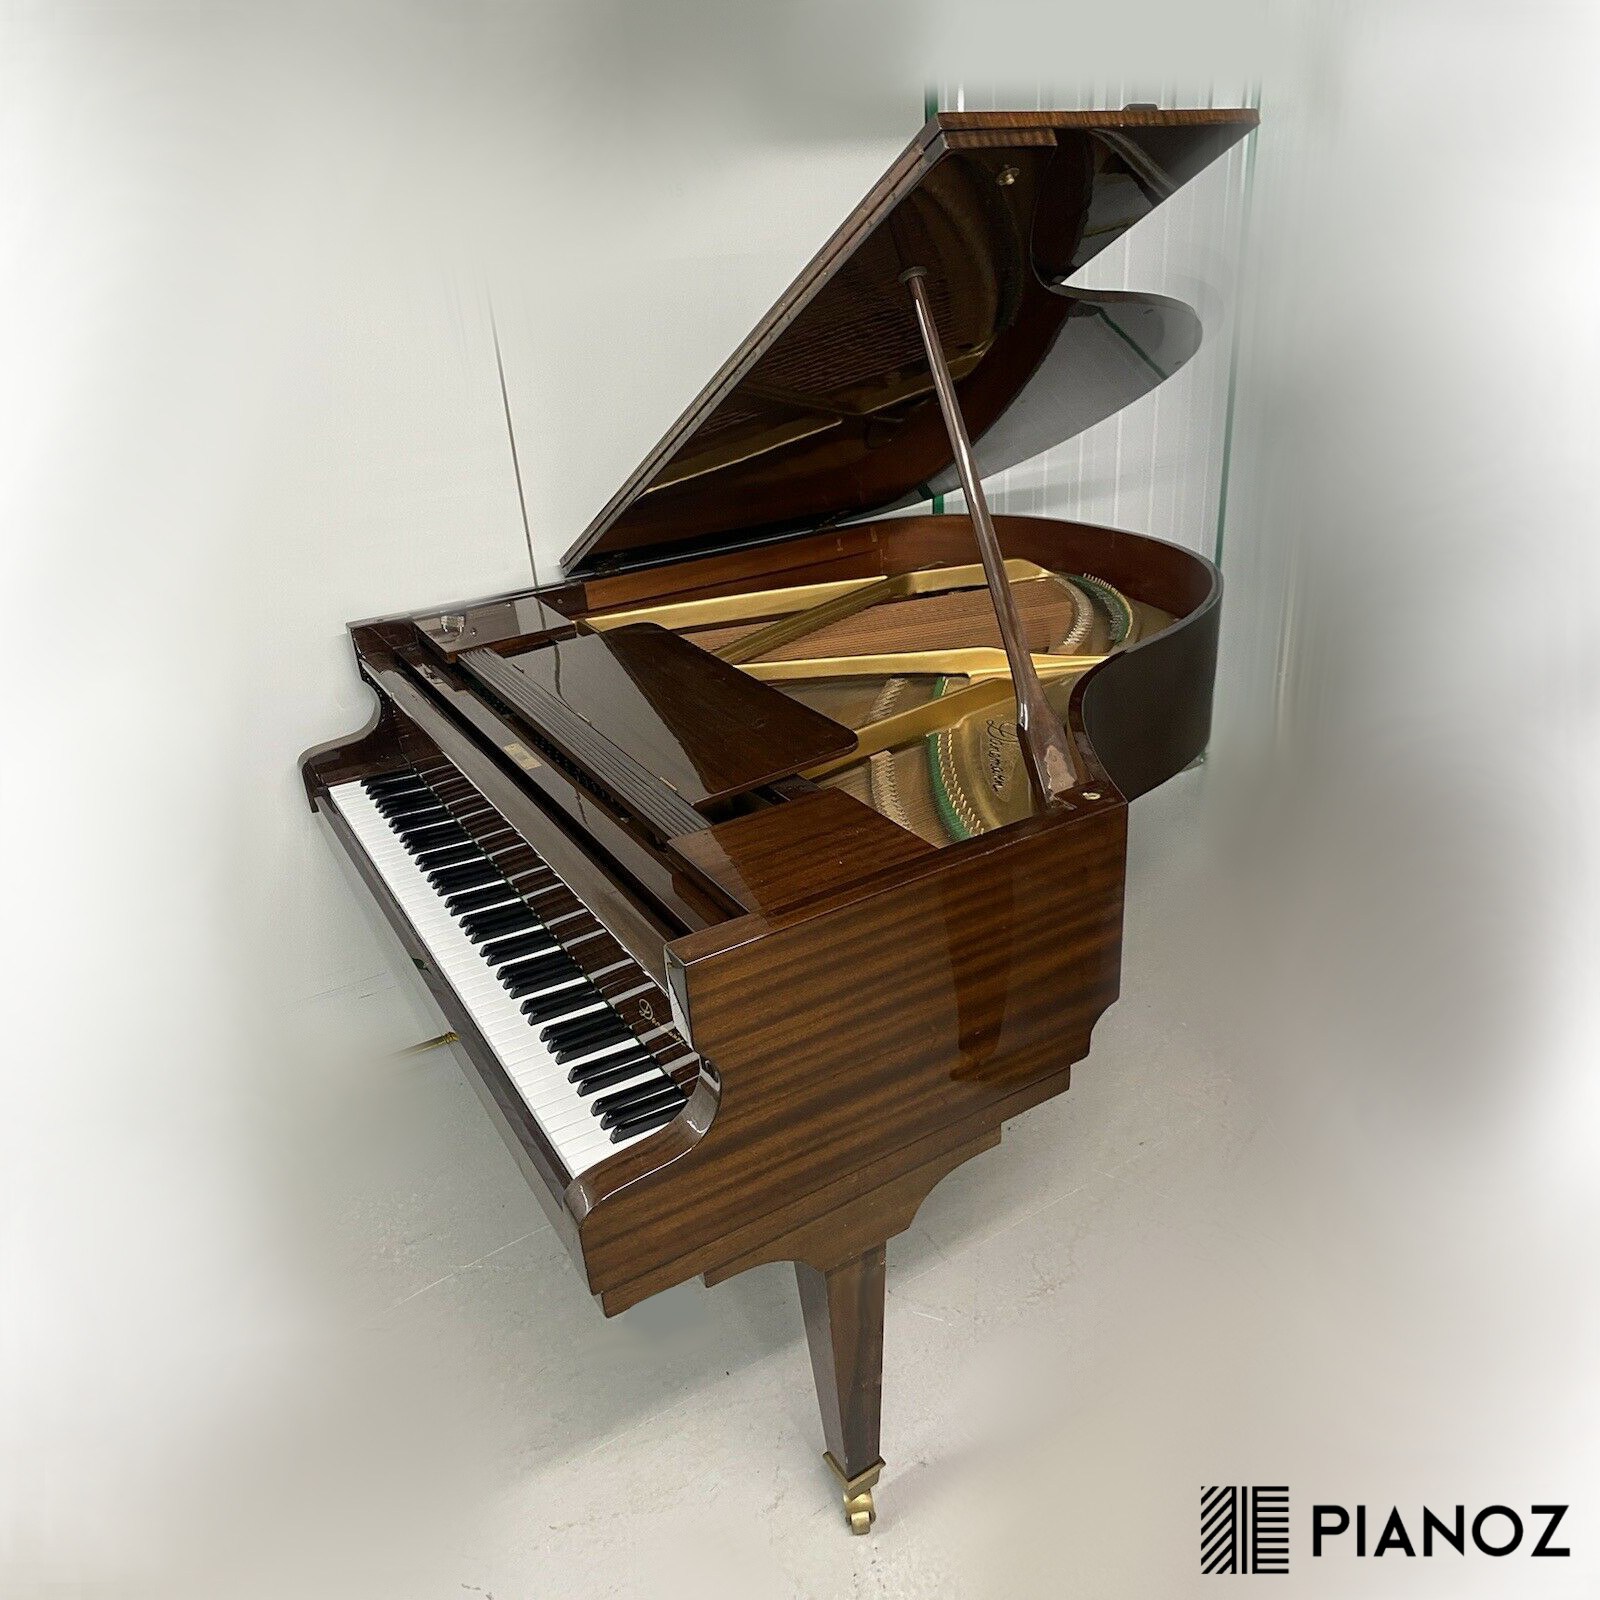 Danemann High Gloss Baby Grand Piano piano for sale in UK